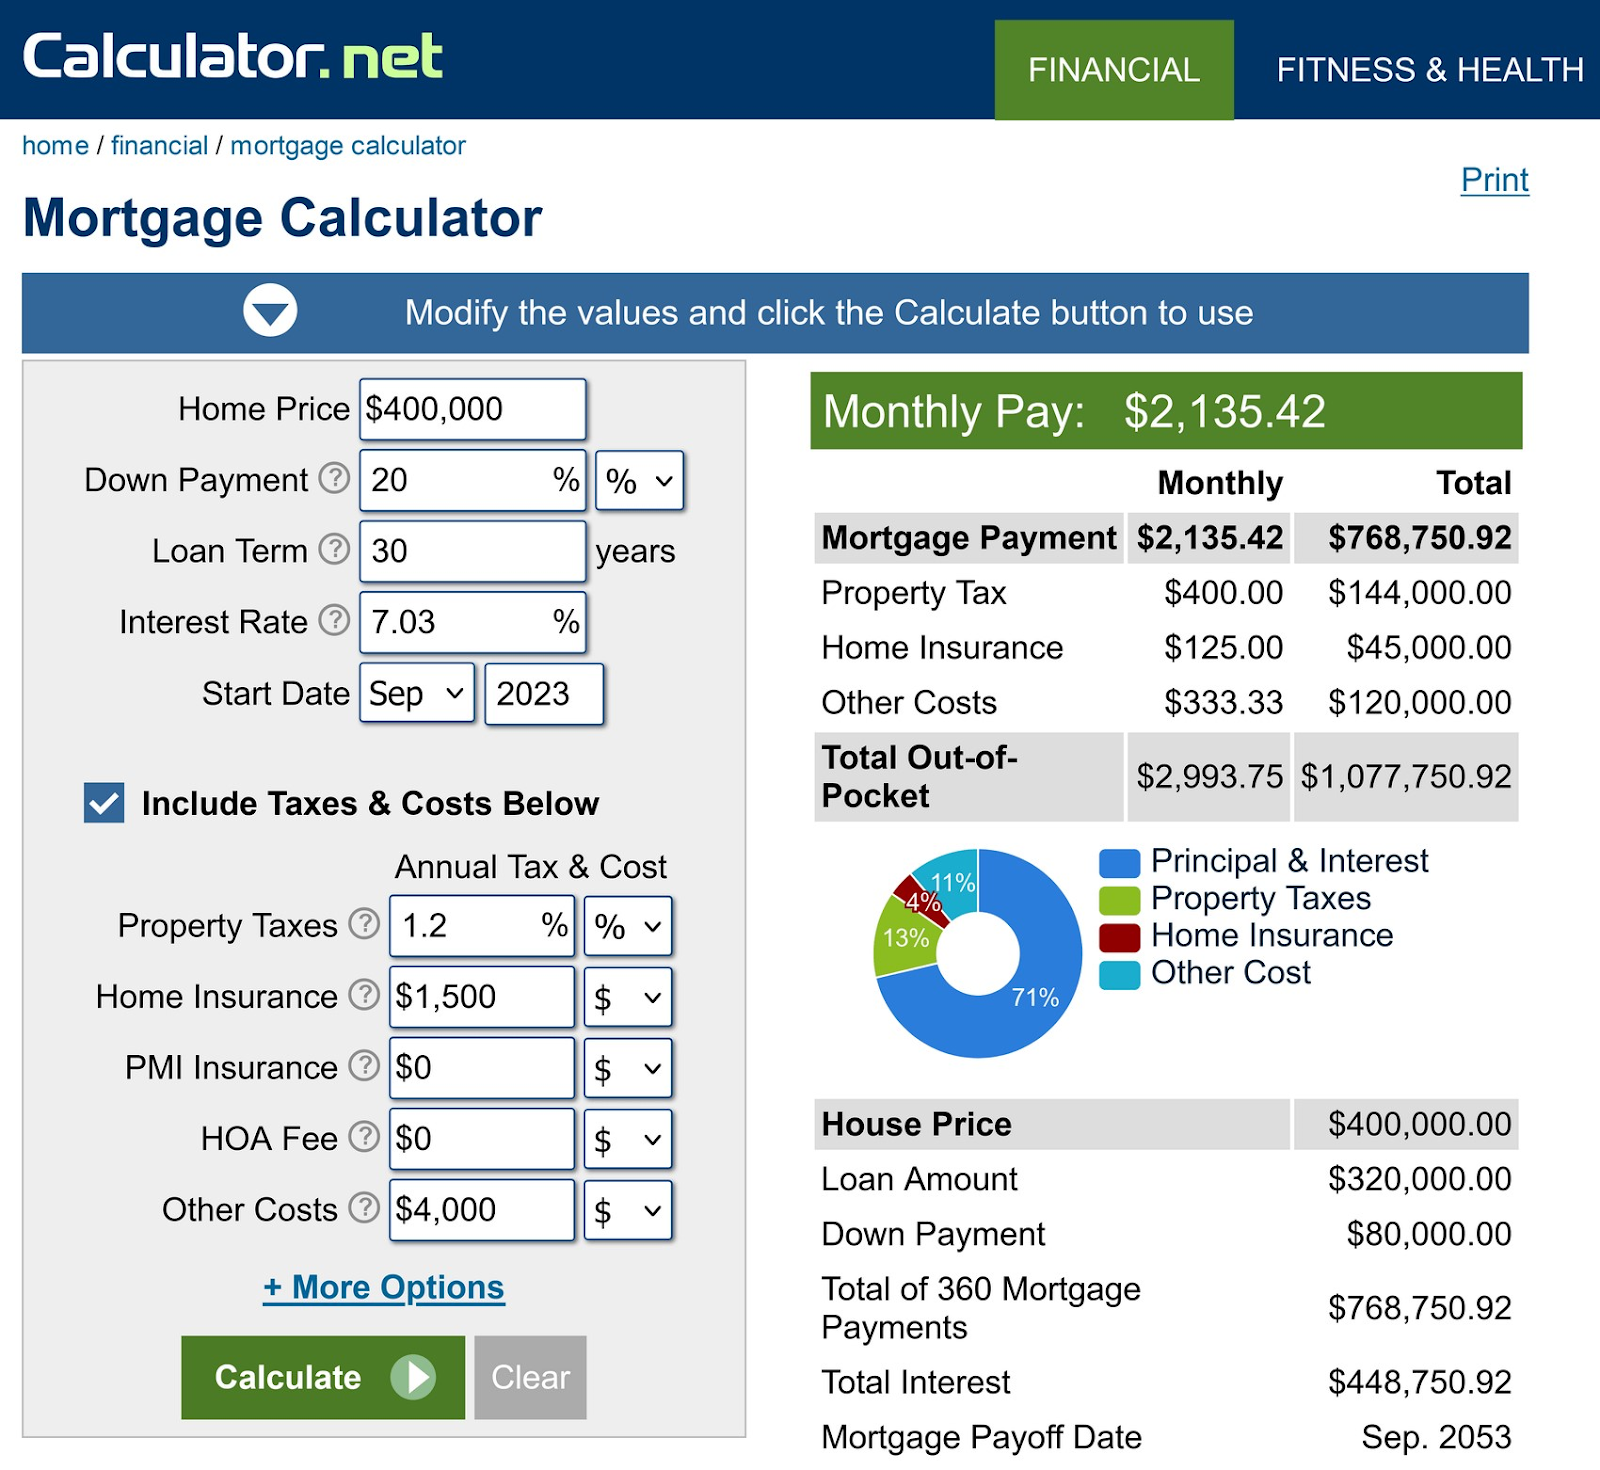 Calcuator.net’s Mortgage Calculator